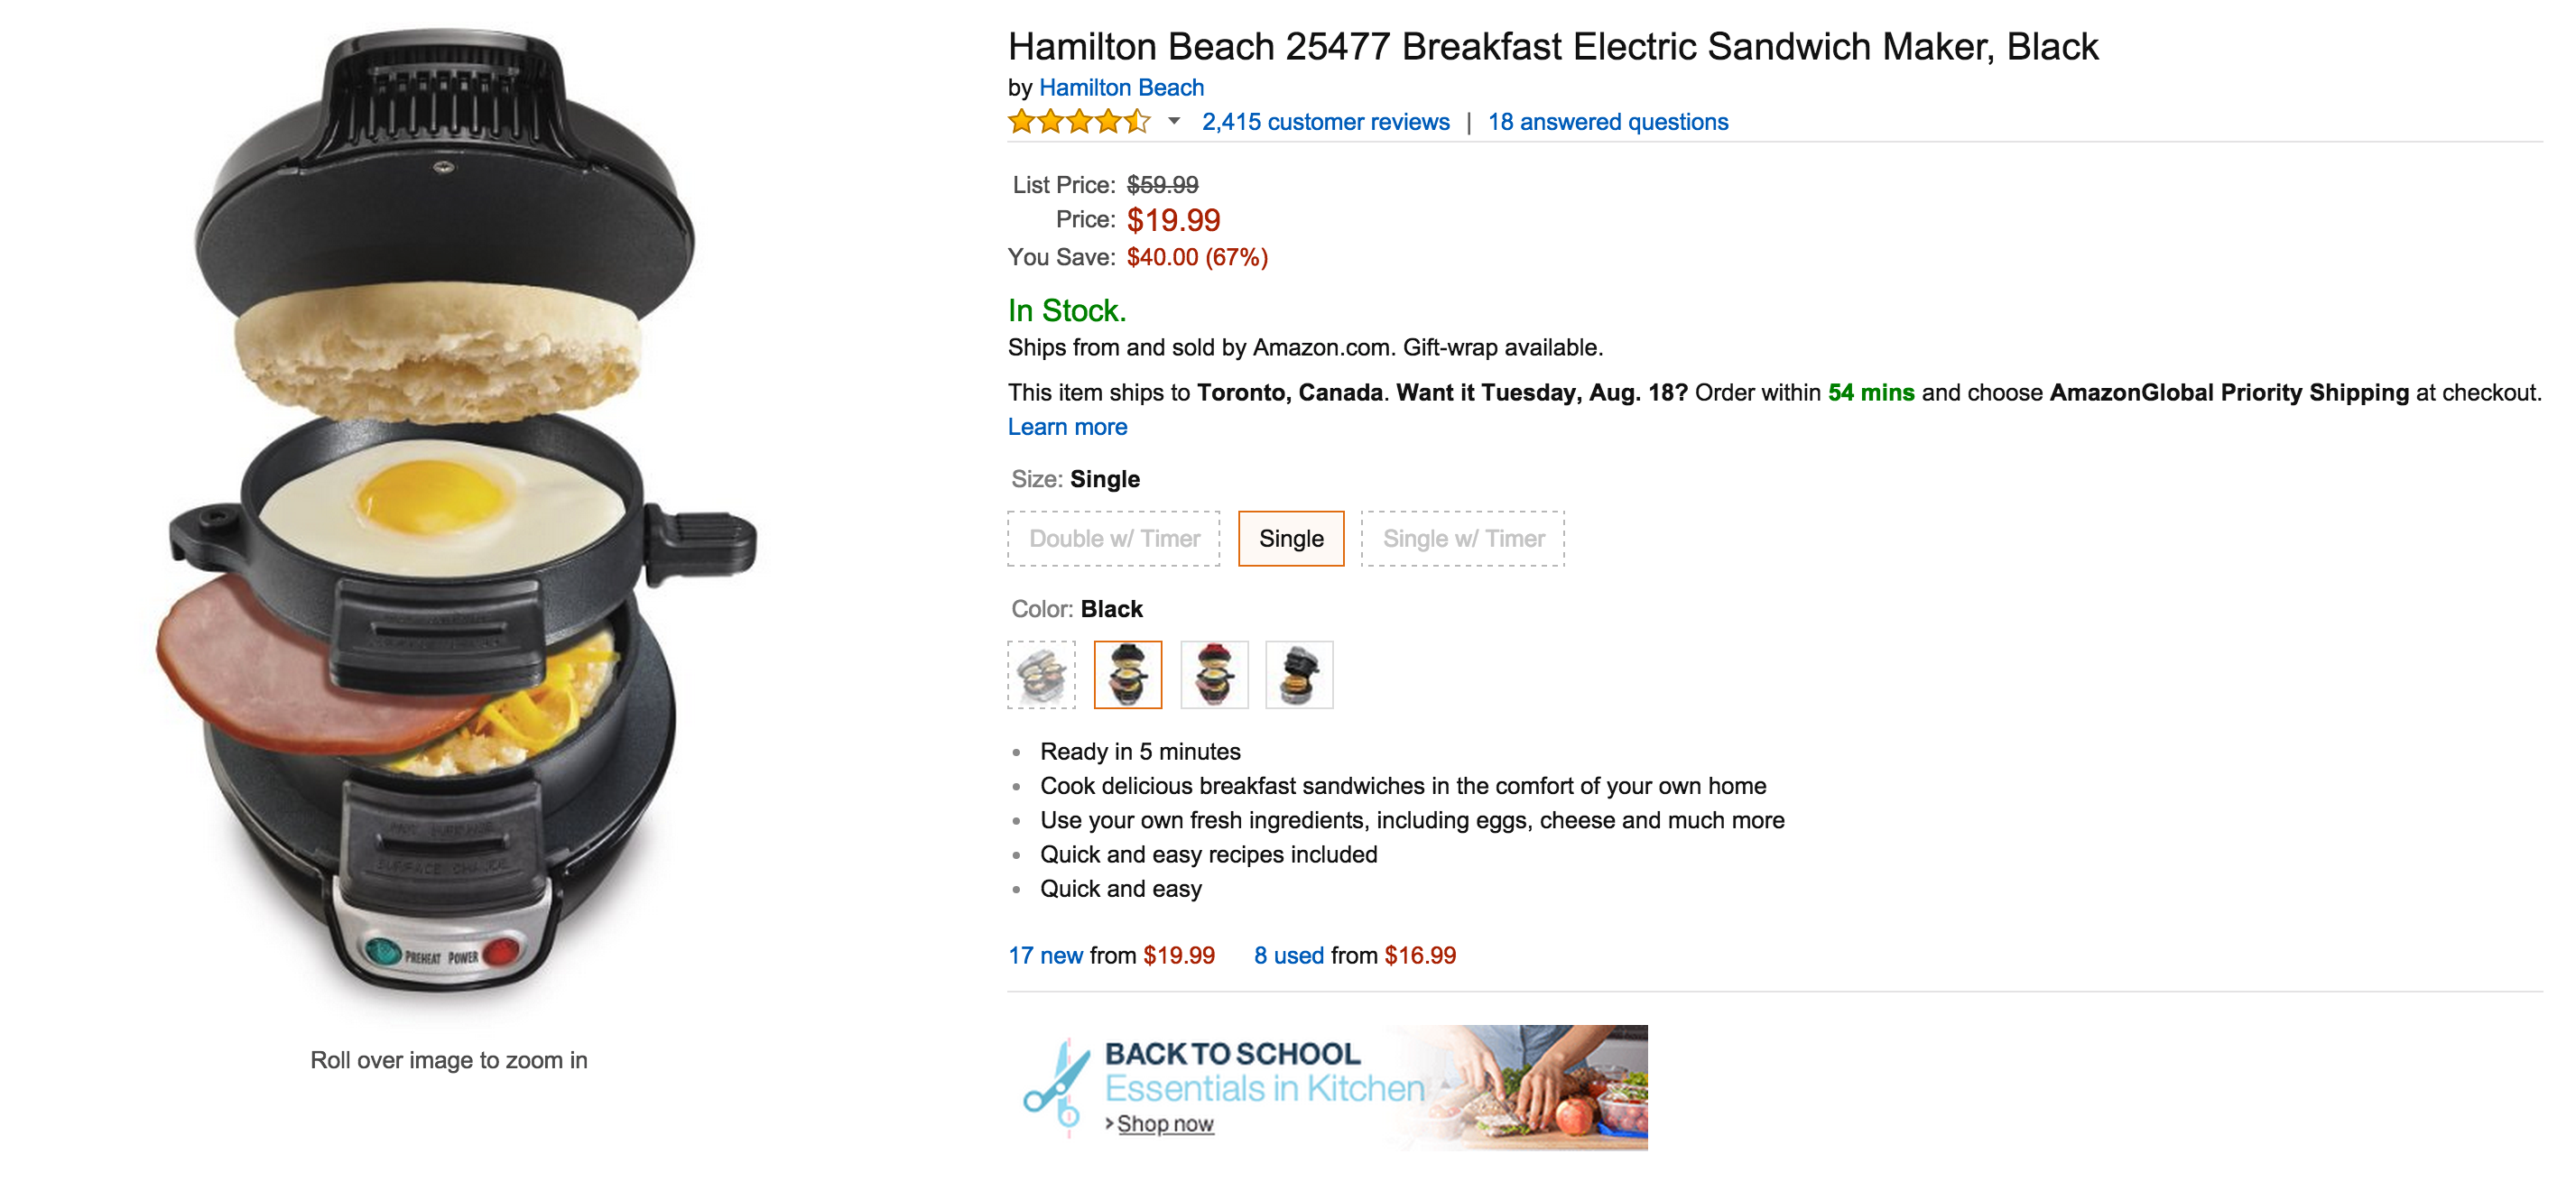 Hamilton Beach Breakfast Sandwich Maker Color: Black 25477